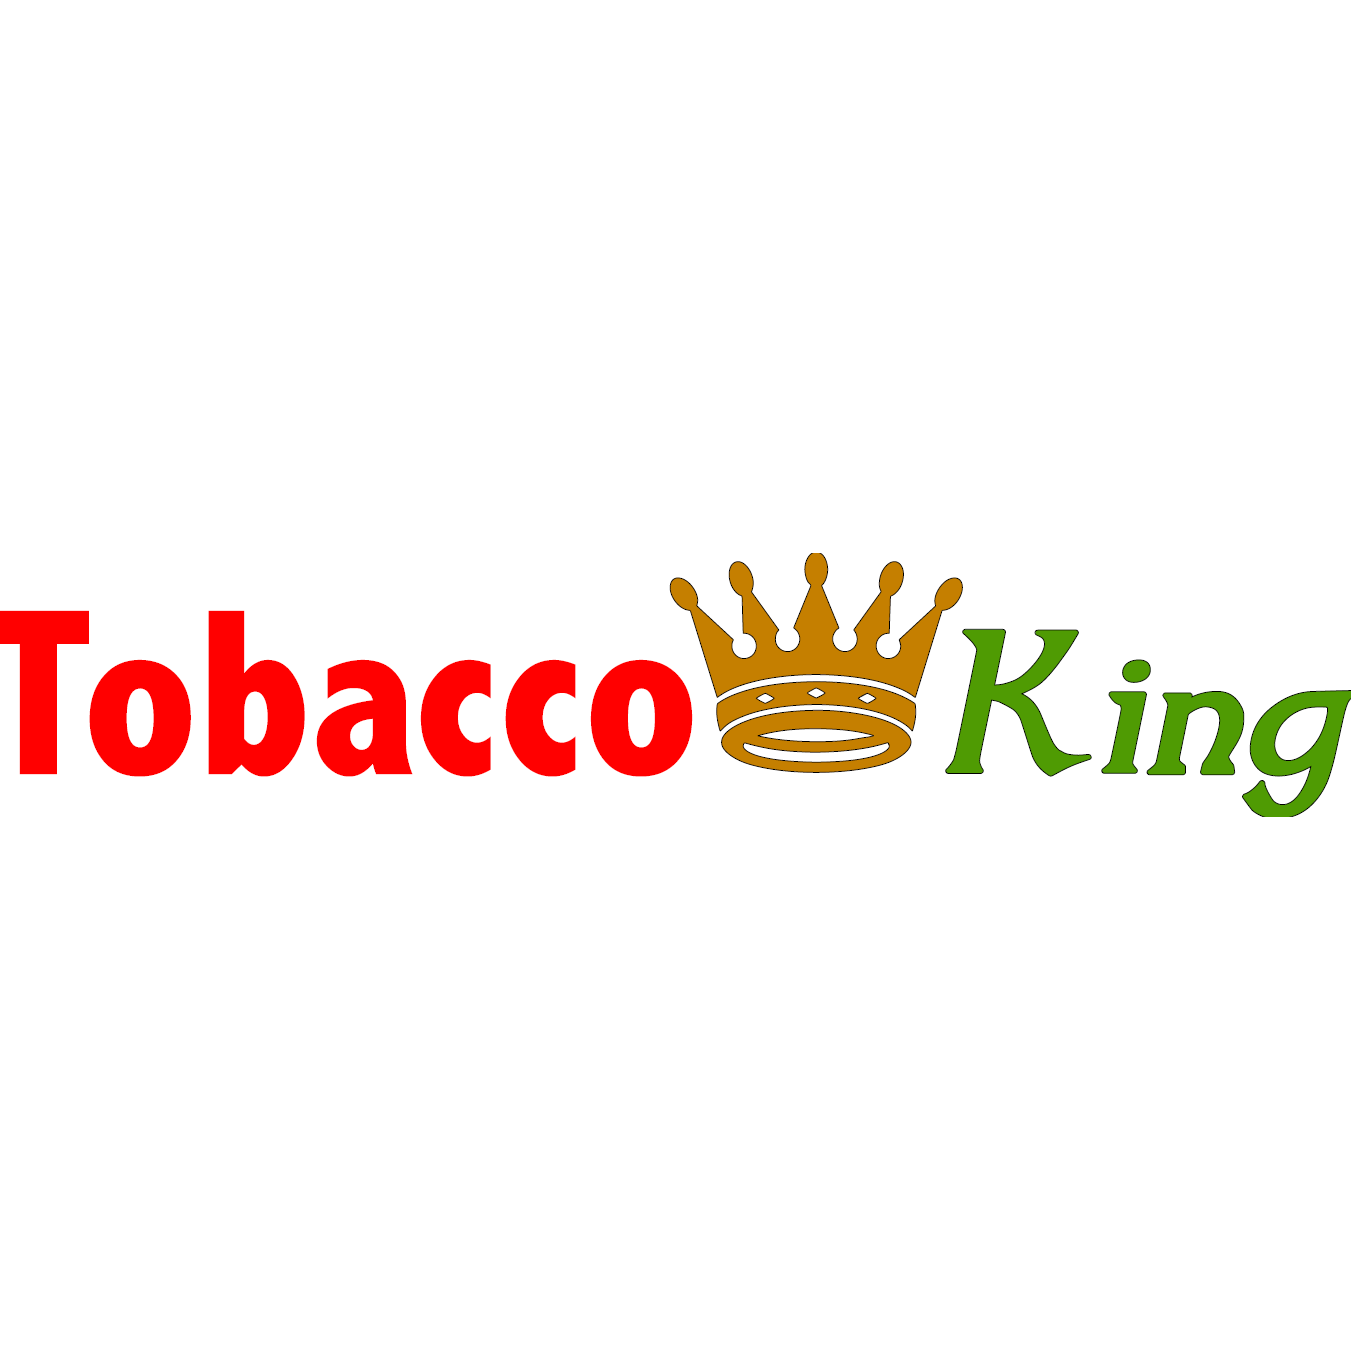 TOBACCO KING OF VAPE CBD KRATOM AND HOOKAH Photo